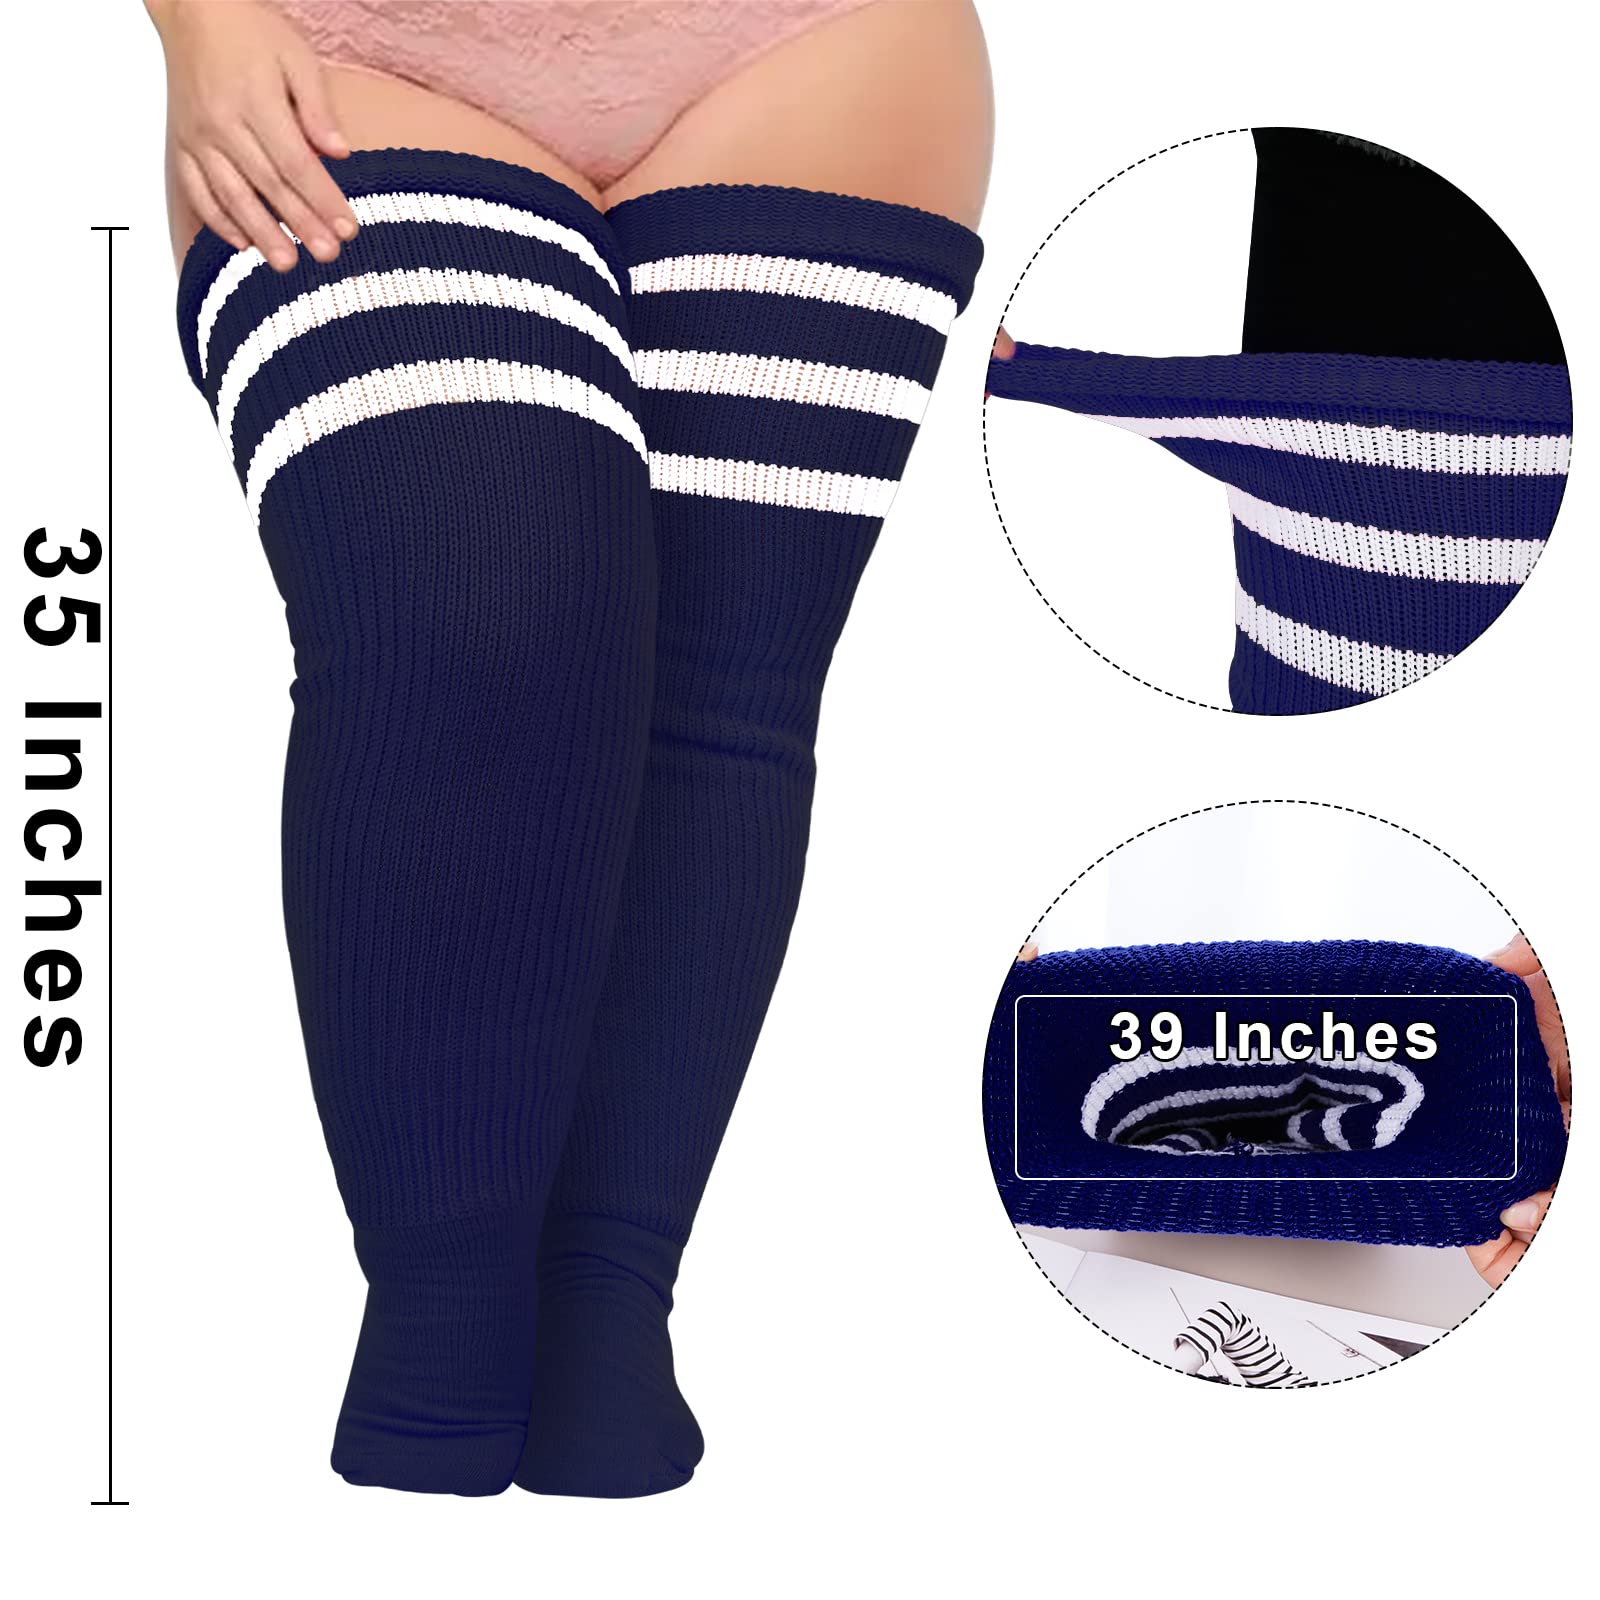 Plus Size Thigh High Socks Striped- Navy & White - Moon Wood